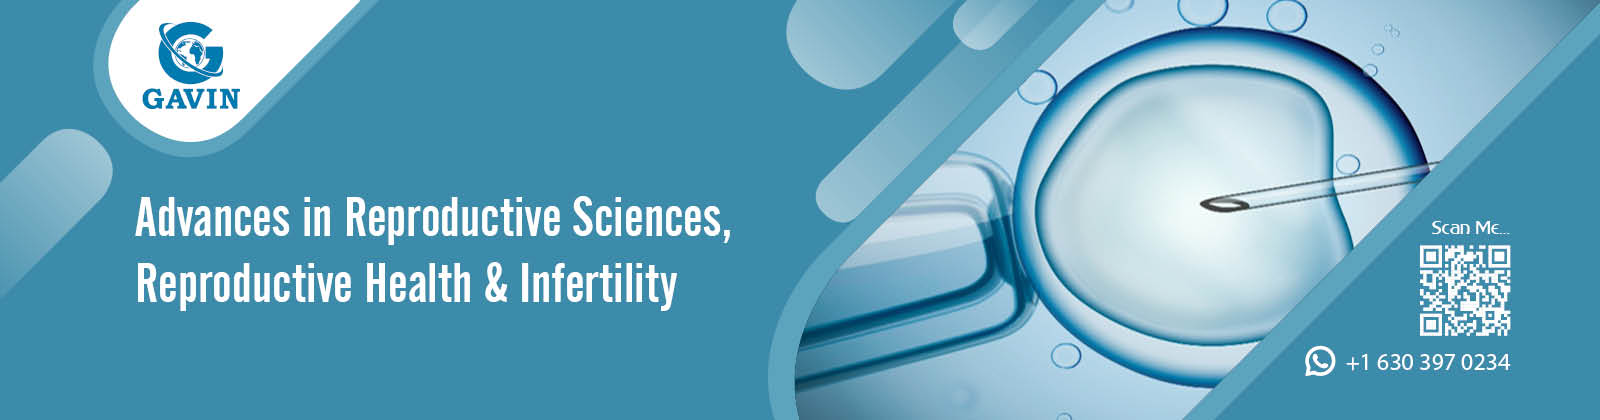 Advances in Reproductive Sciences, Reproductive Health & Infertility